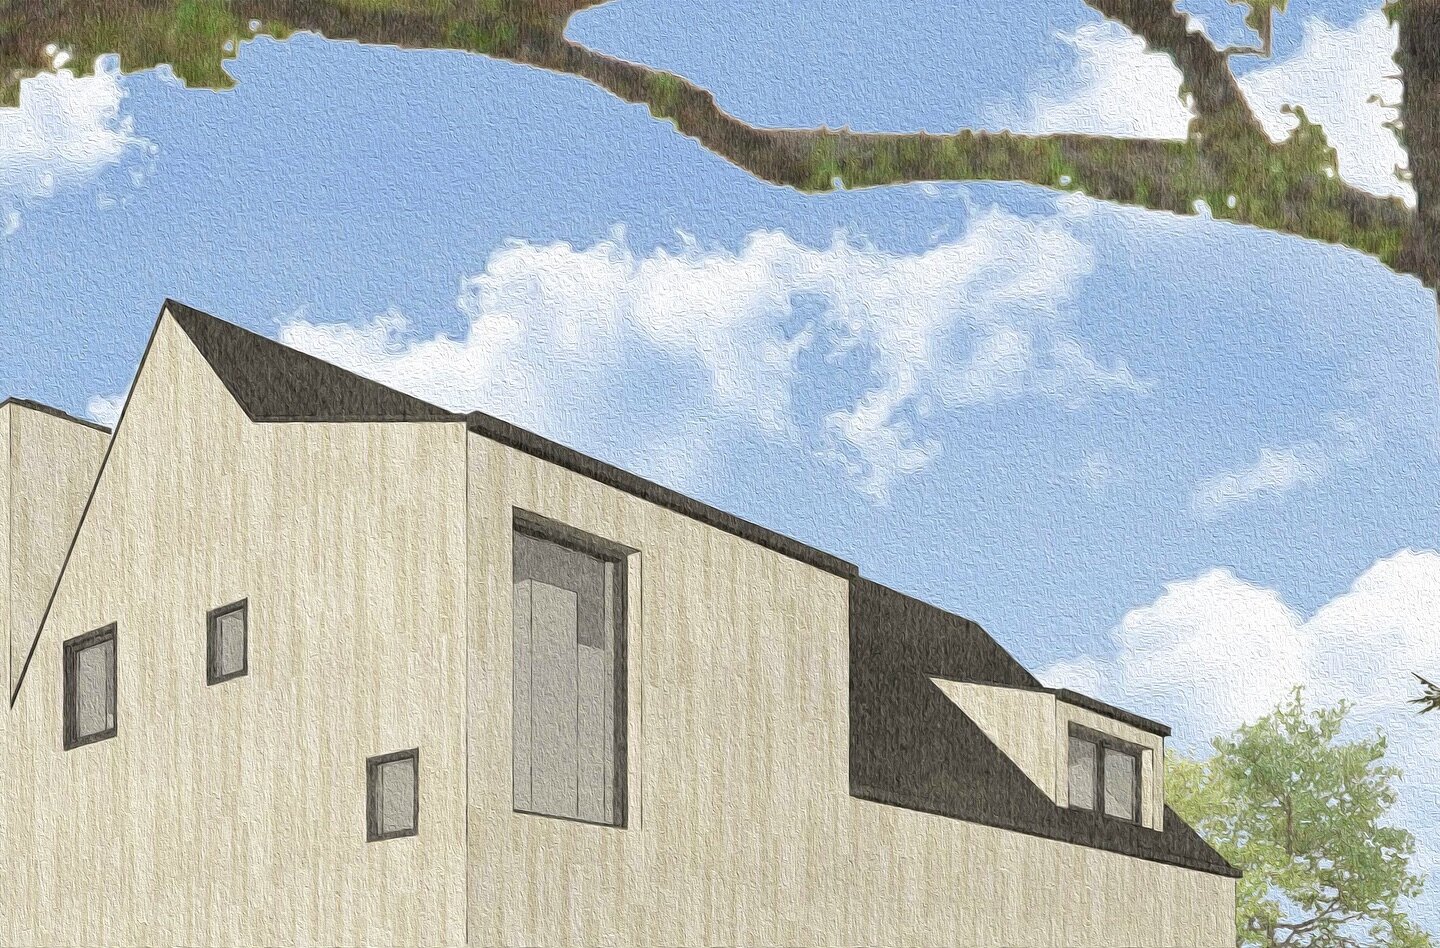 Sketch for a new villa in Eker&ouml;.

#workinprogress 
@rushtonarkitektur 

#ladhus #ladhusinspiration #ladhusdesign #nordicdesign #arkitektritat #nordicstyle #scandihome #arkitektritathus #scandiinterior #scandi #kltr&auml; #clt #scandiinspo #scand